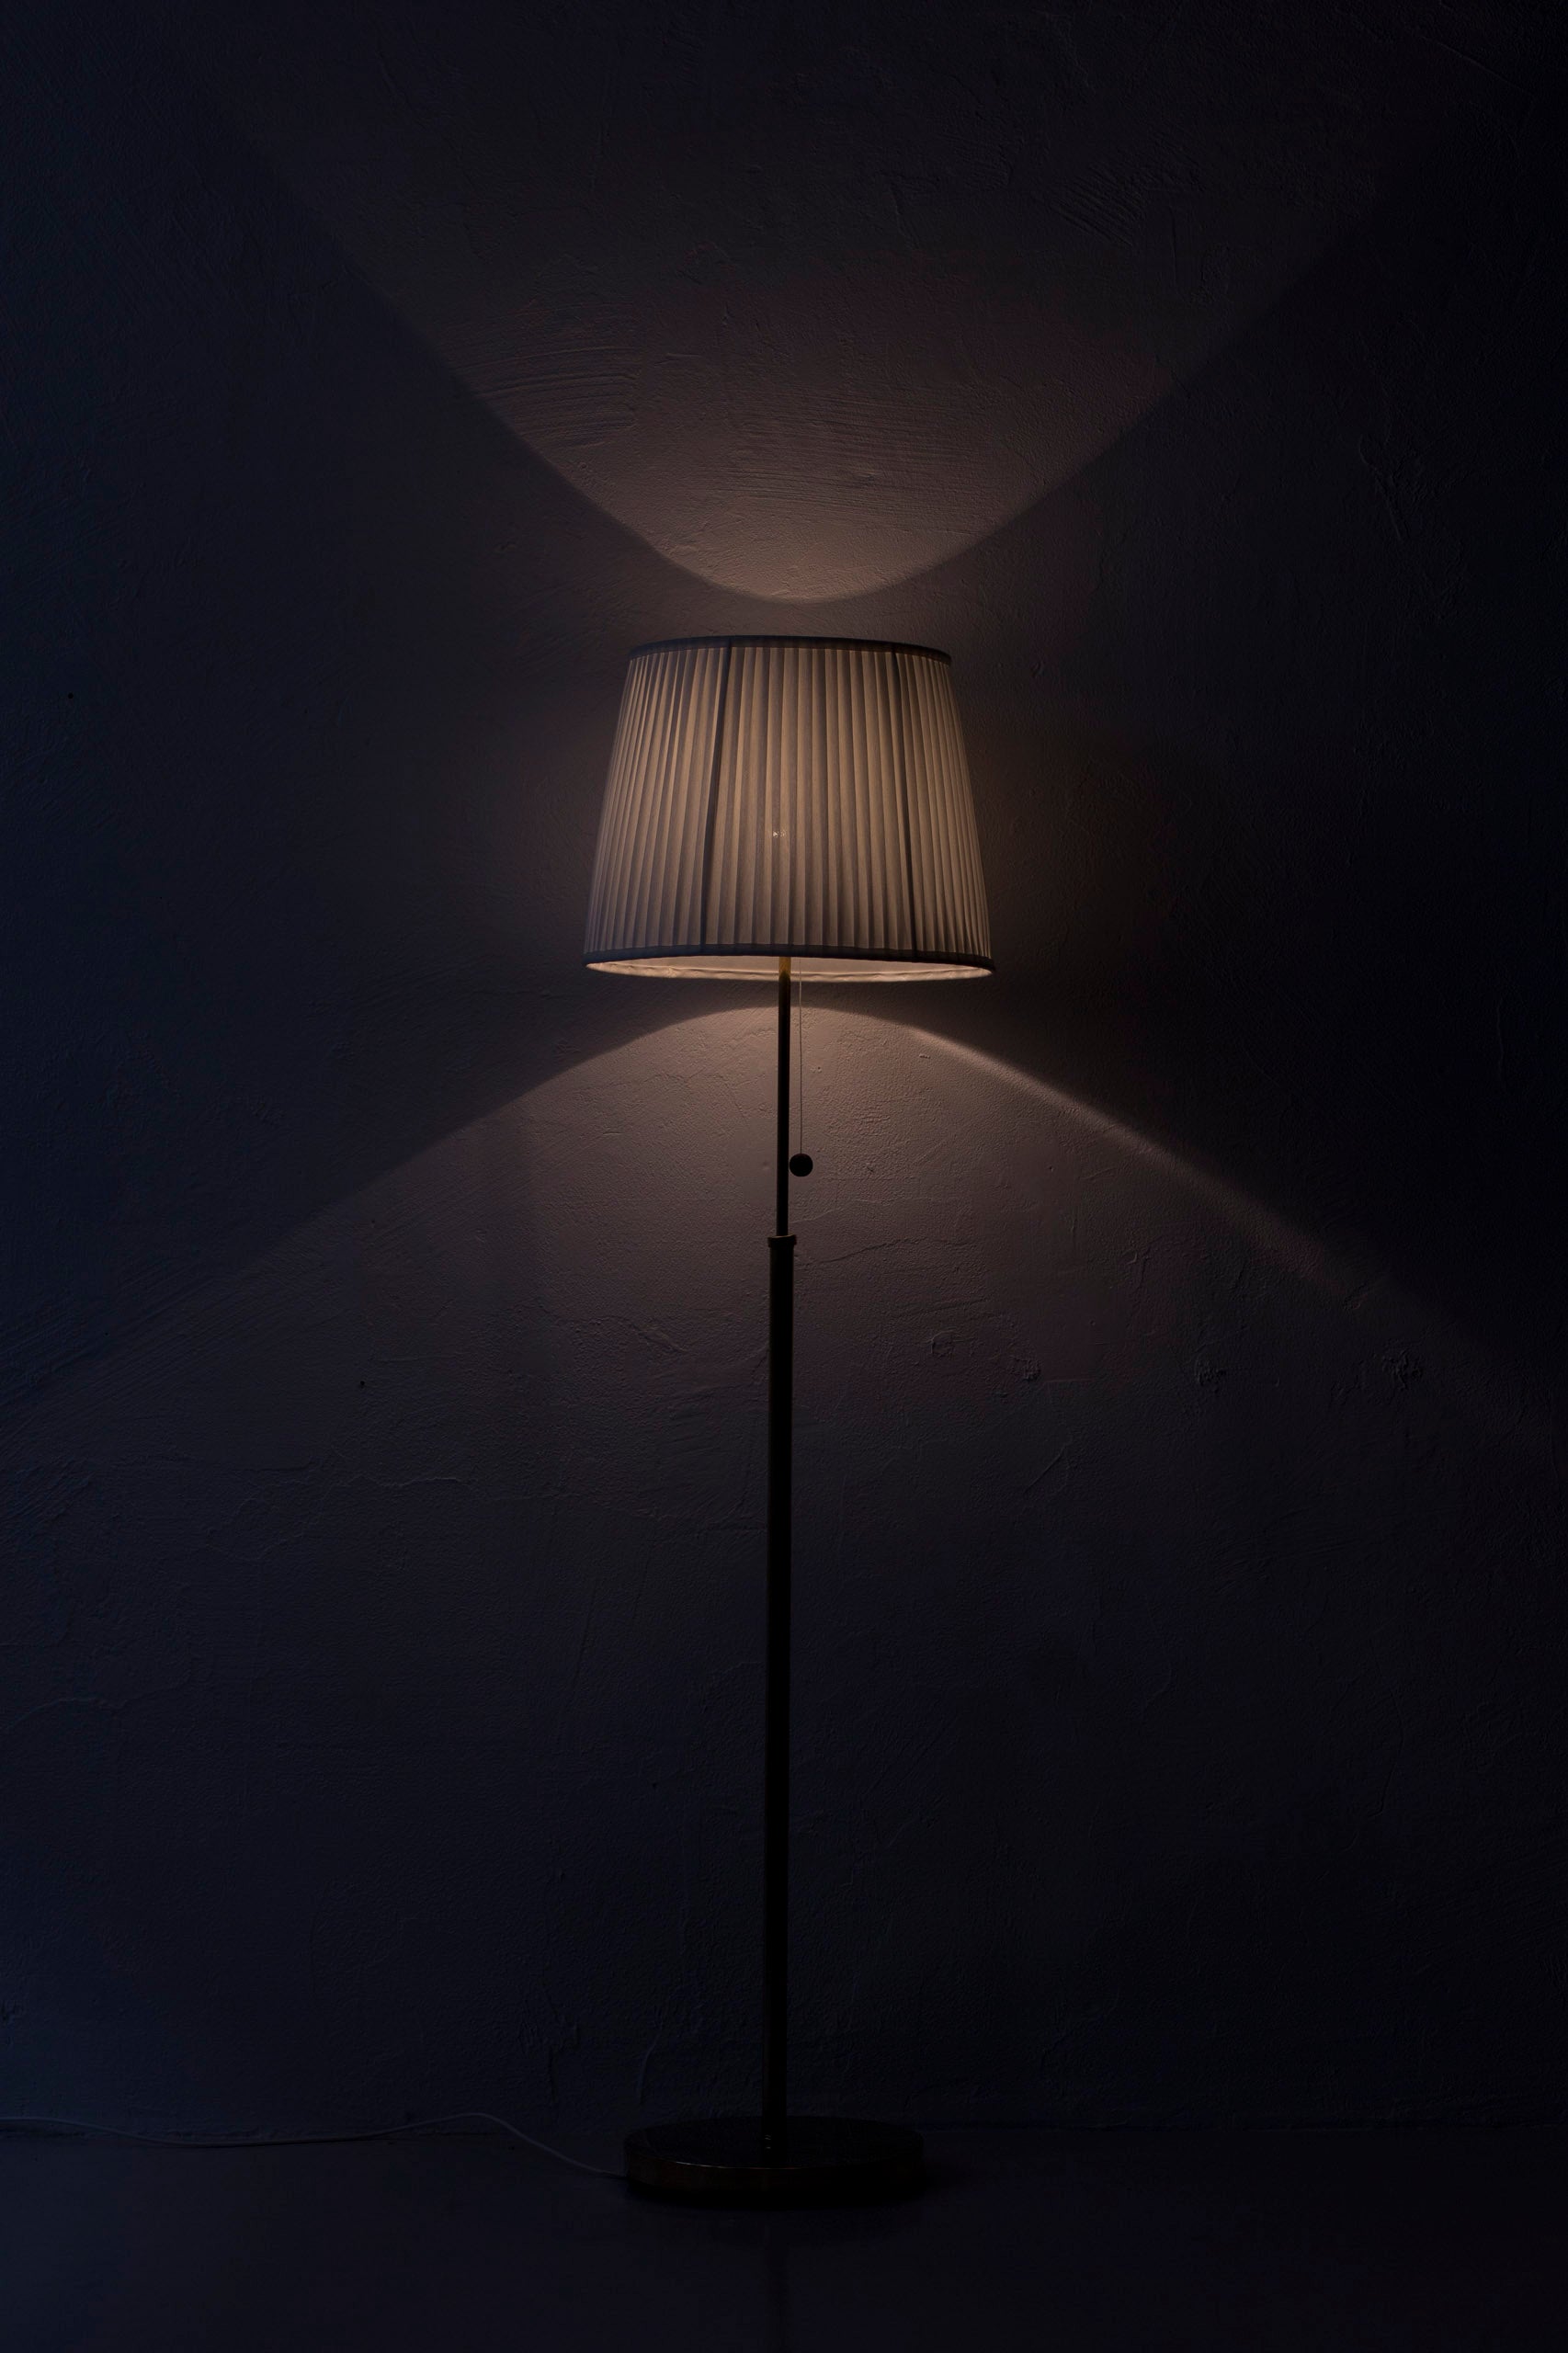 Swedish modern brass floor lamp